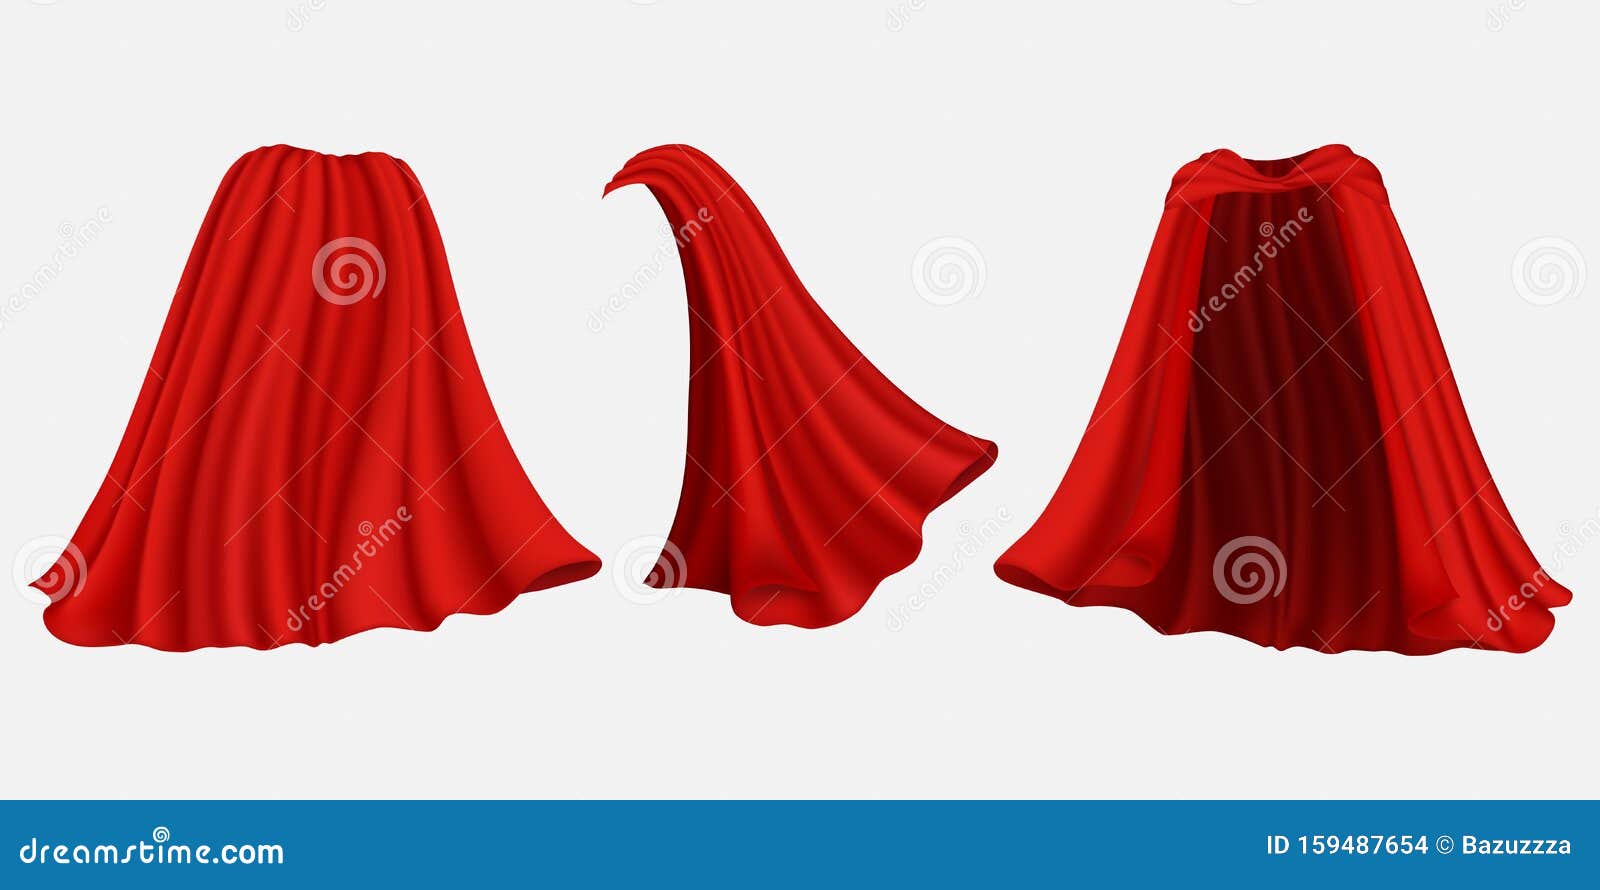 superhero red silk cloak,   